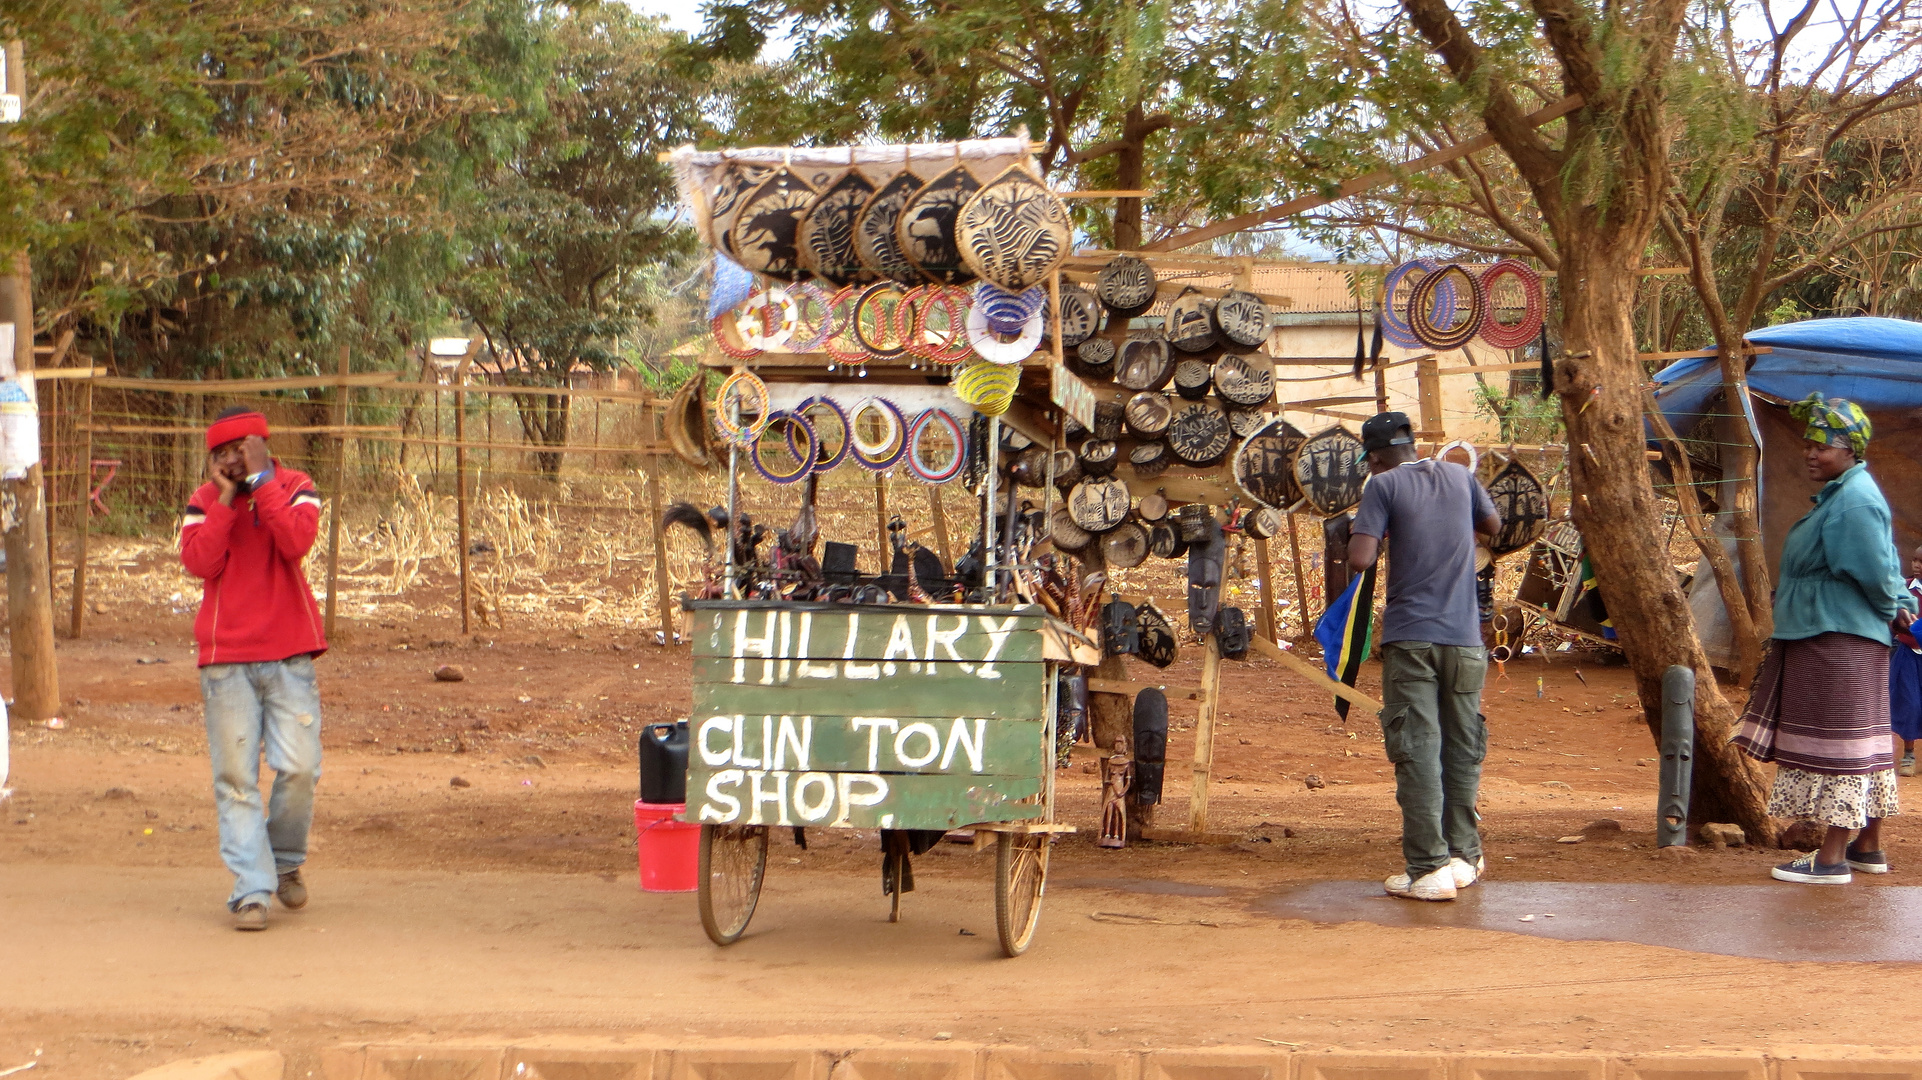 Hillary Clinton Shop in Karatu / Tansania